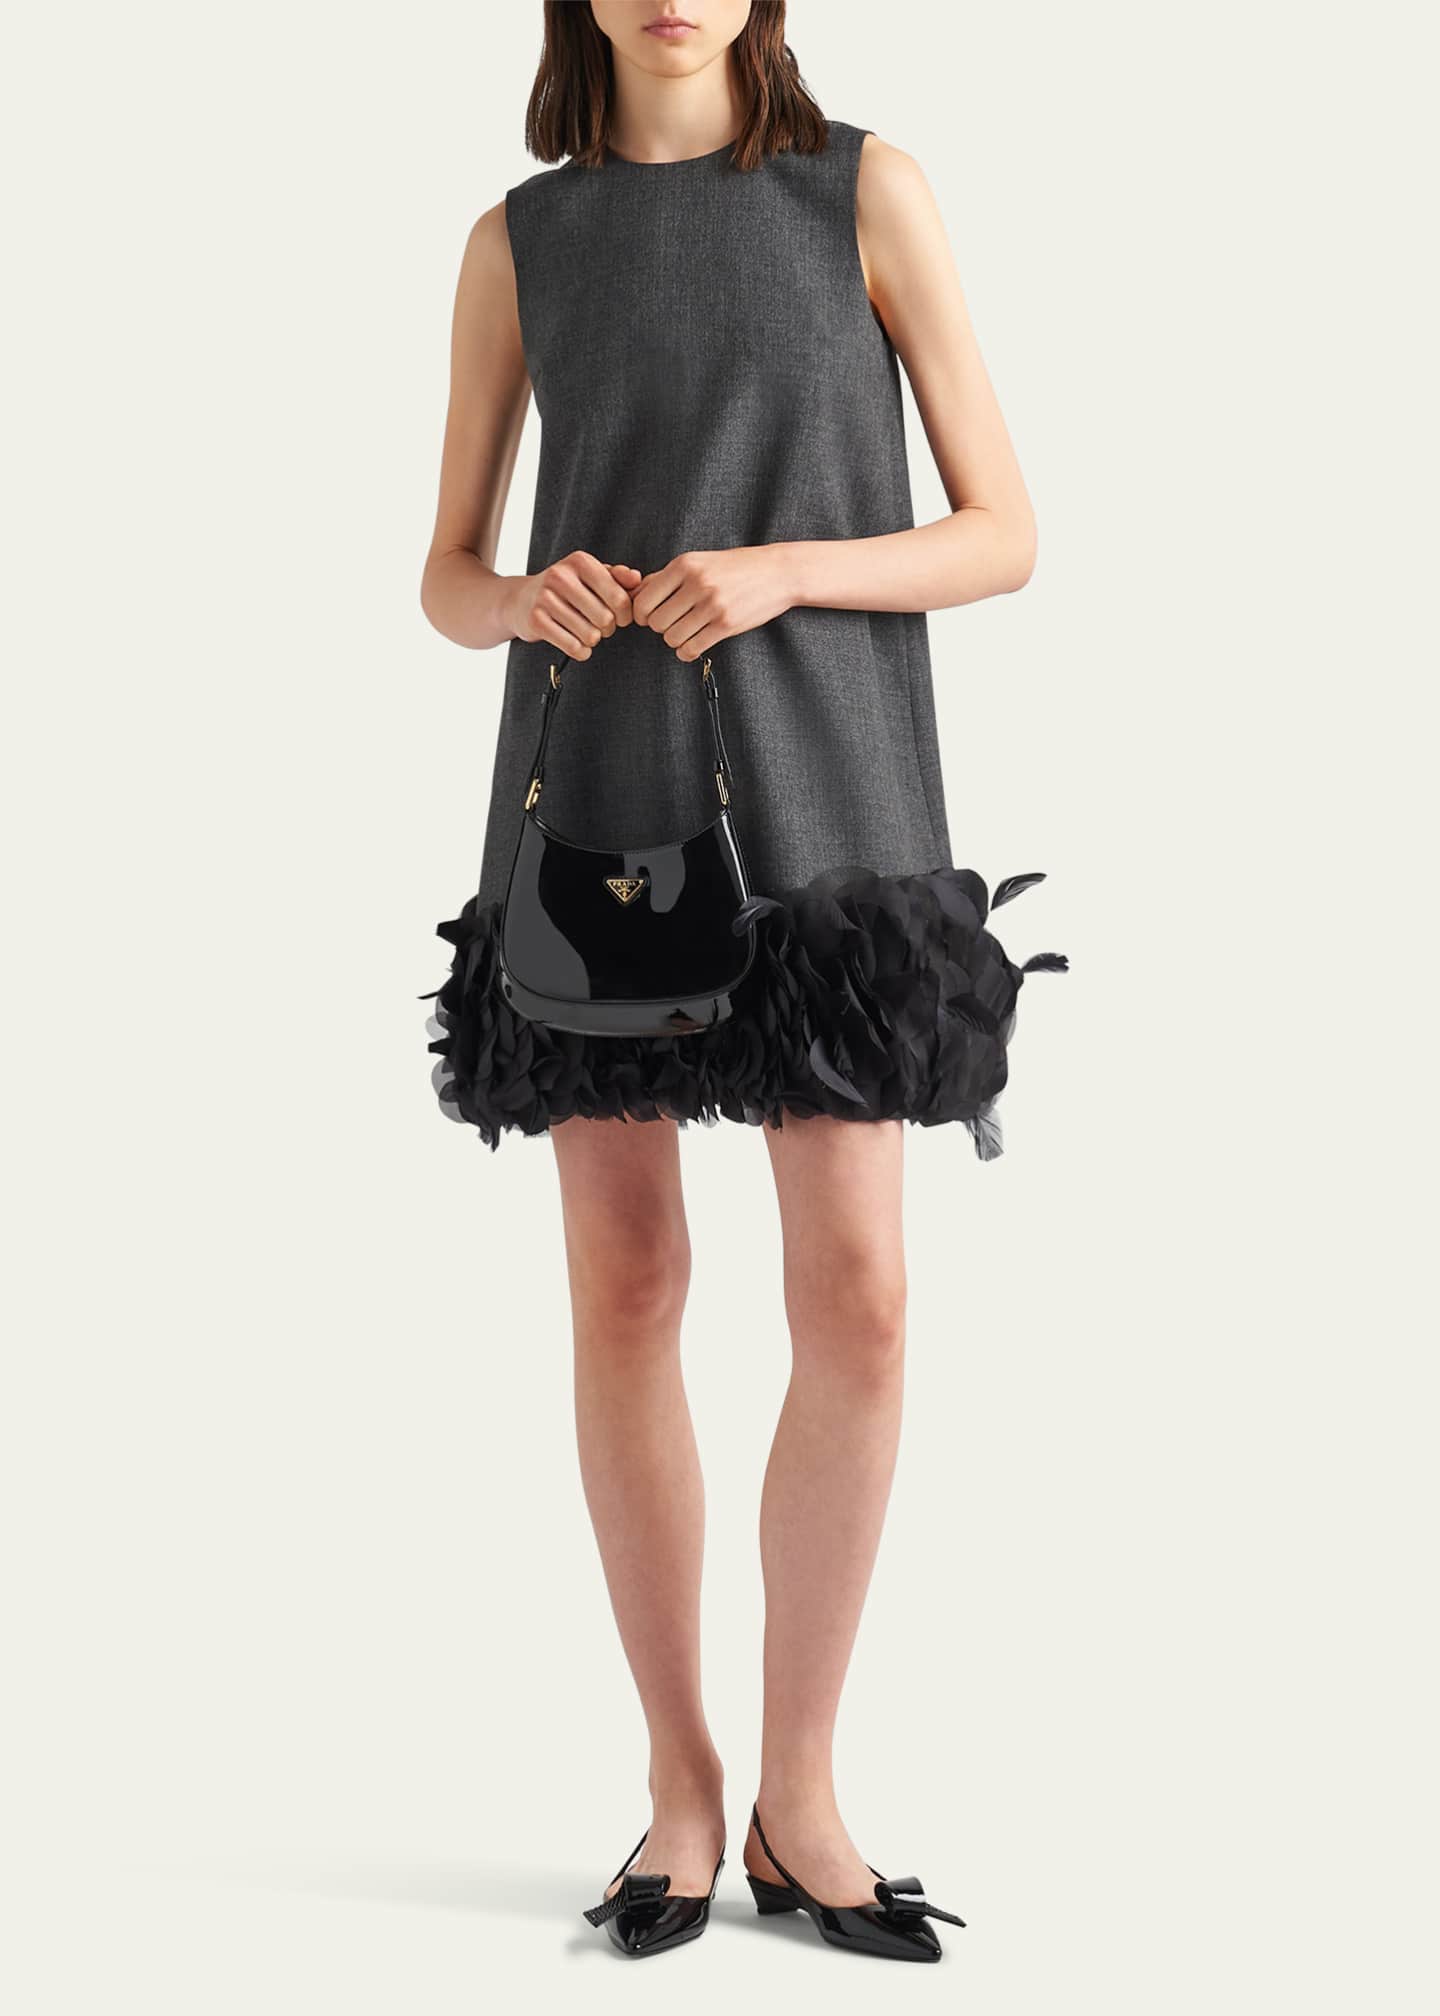 Prada's $3,650 dress mocked for resembling 'Travelodge towel